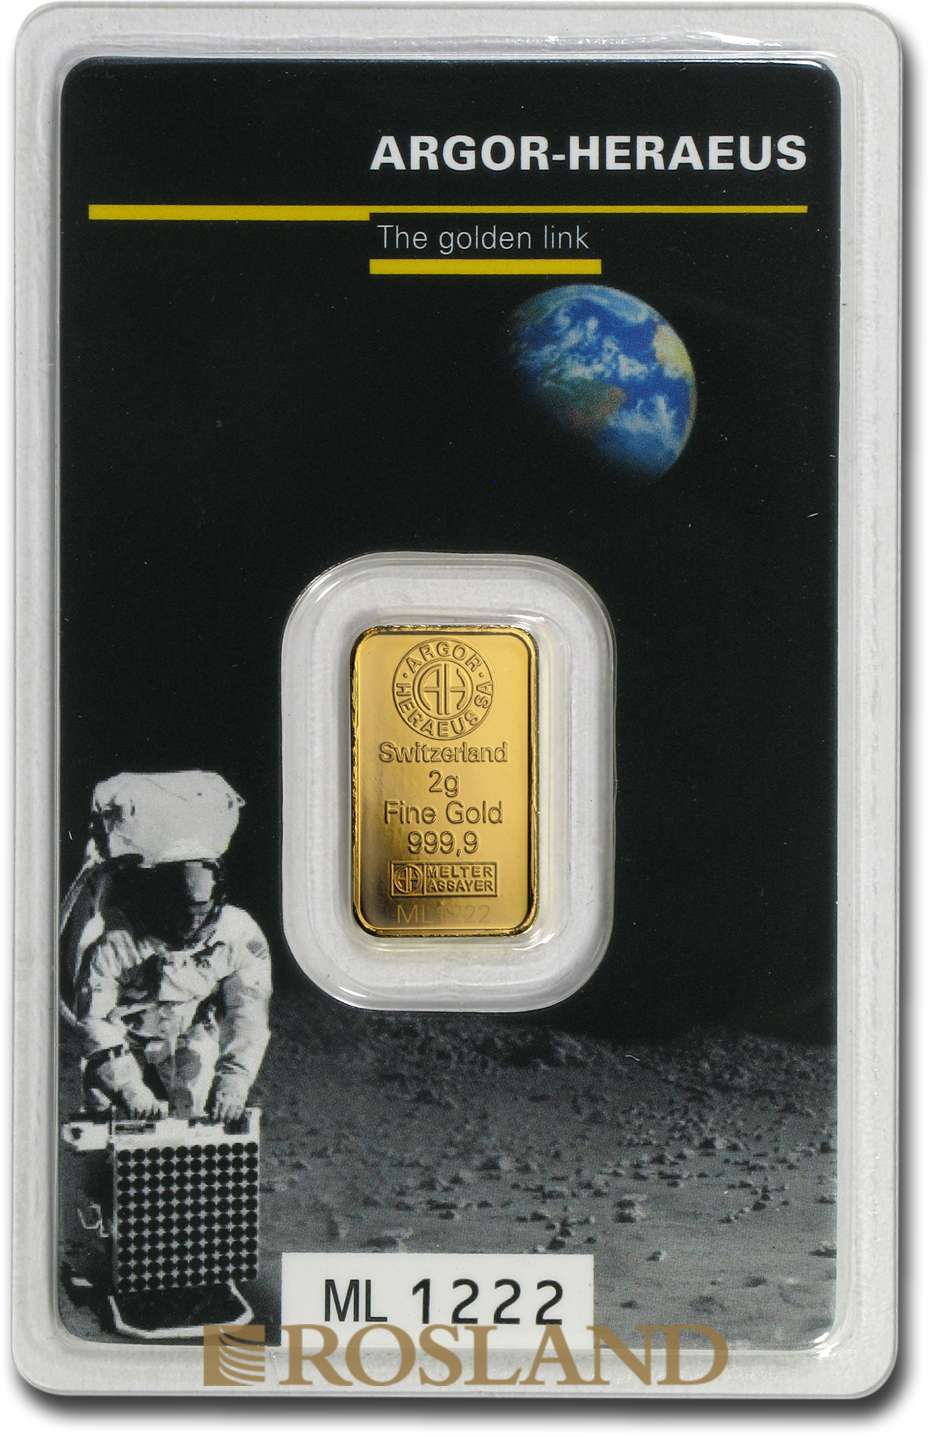 2 Gramm Goldbarren Heraeus Argor Apollo 11 Mondlandung